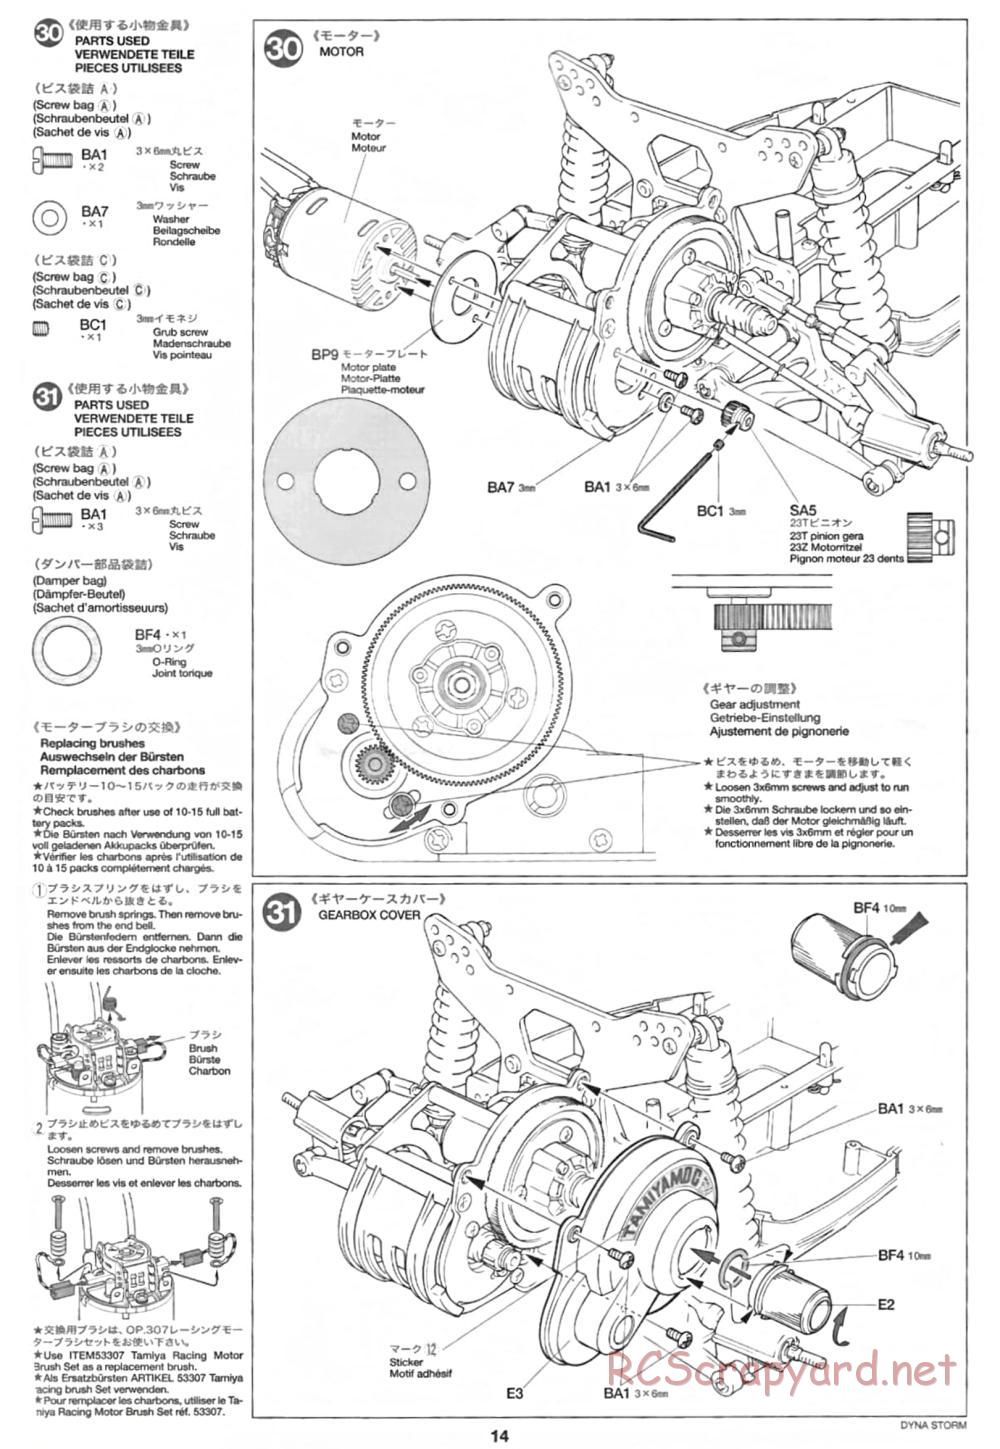 Tamiya - Dyna Storm Chassis - Manual - Page 14